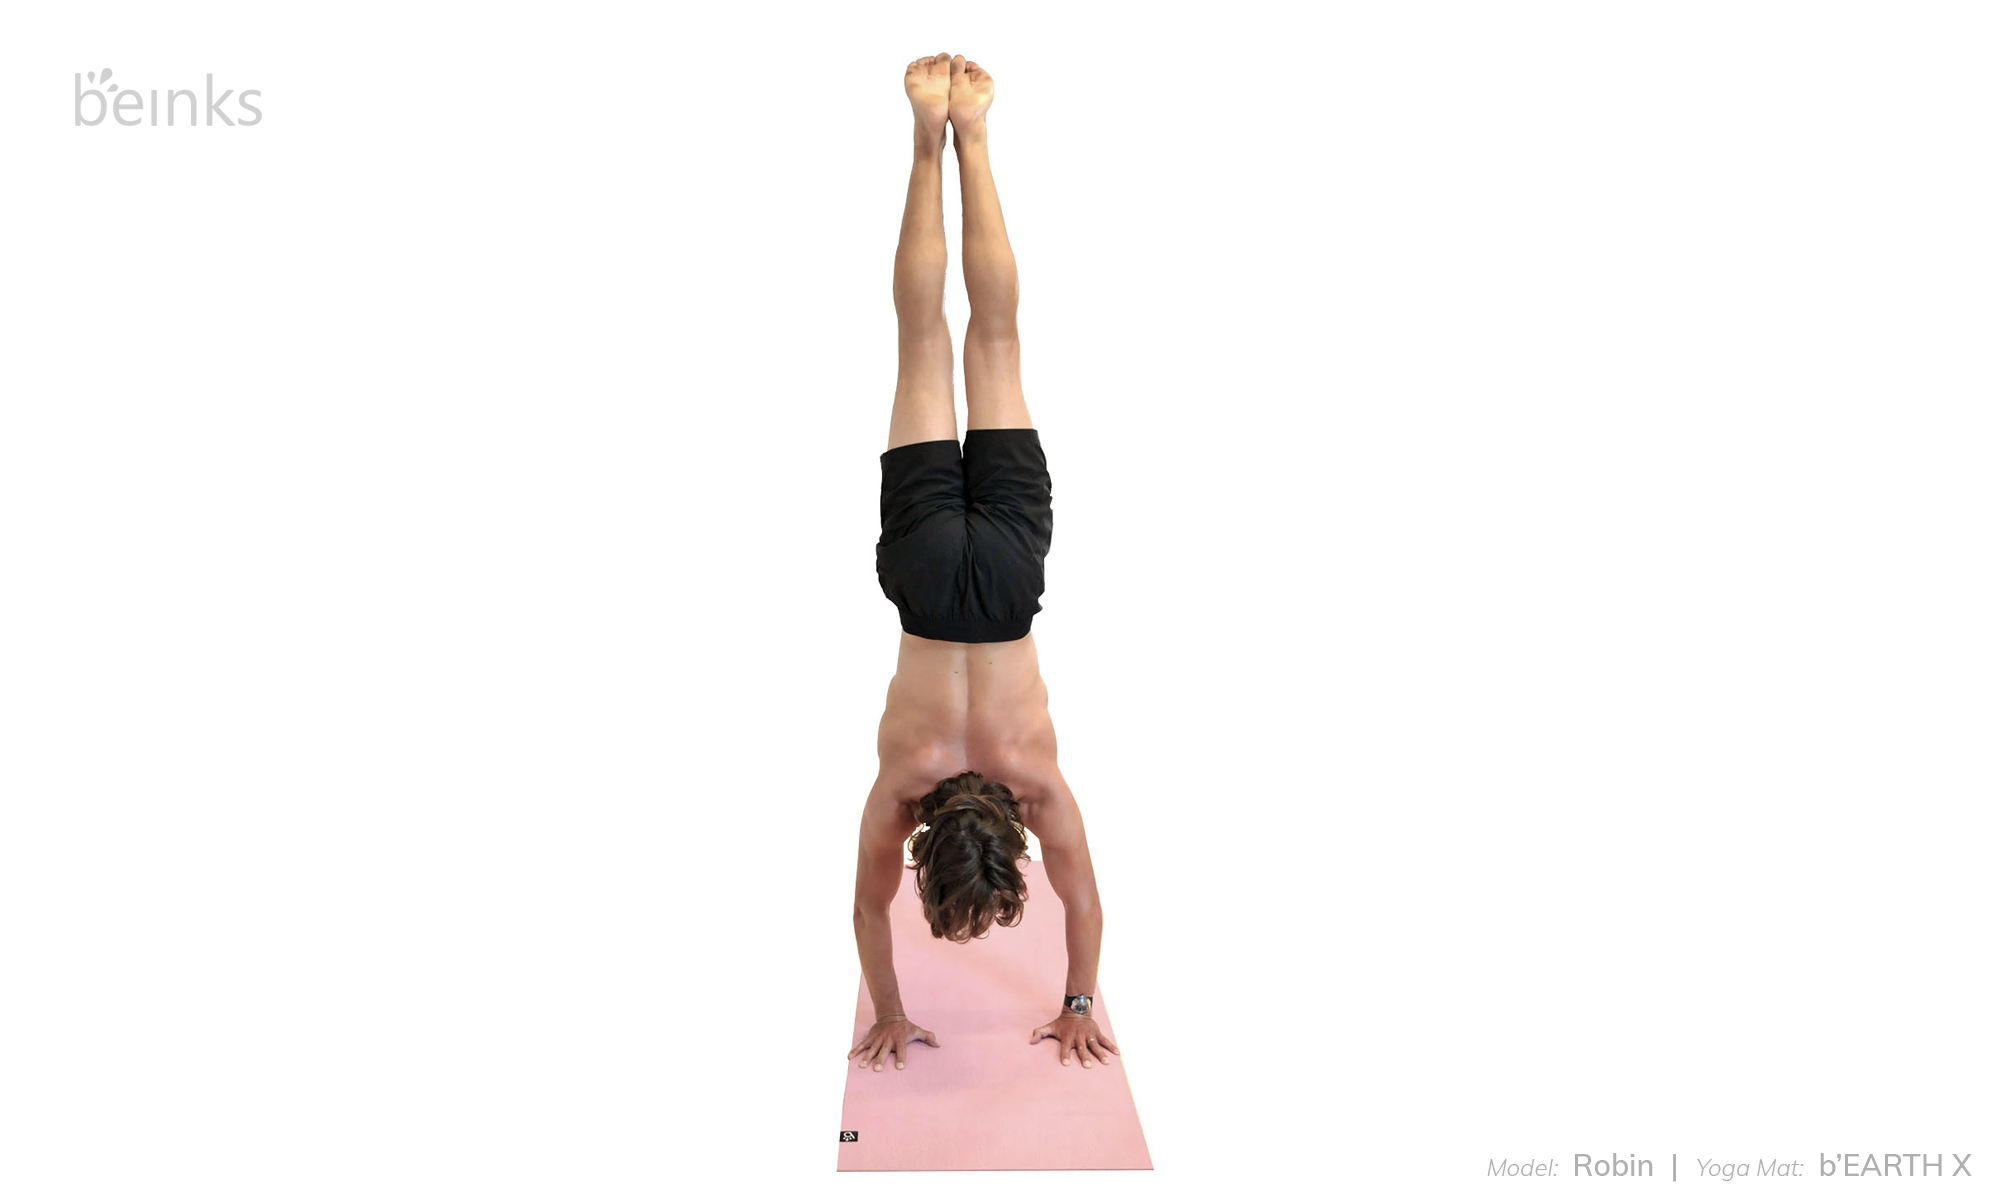 Janice Liou on Instagram | Yoga for beginners, Yoga postures, Yoga handstand